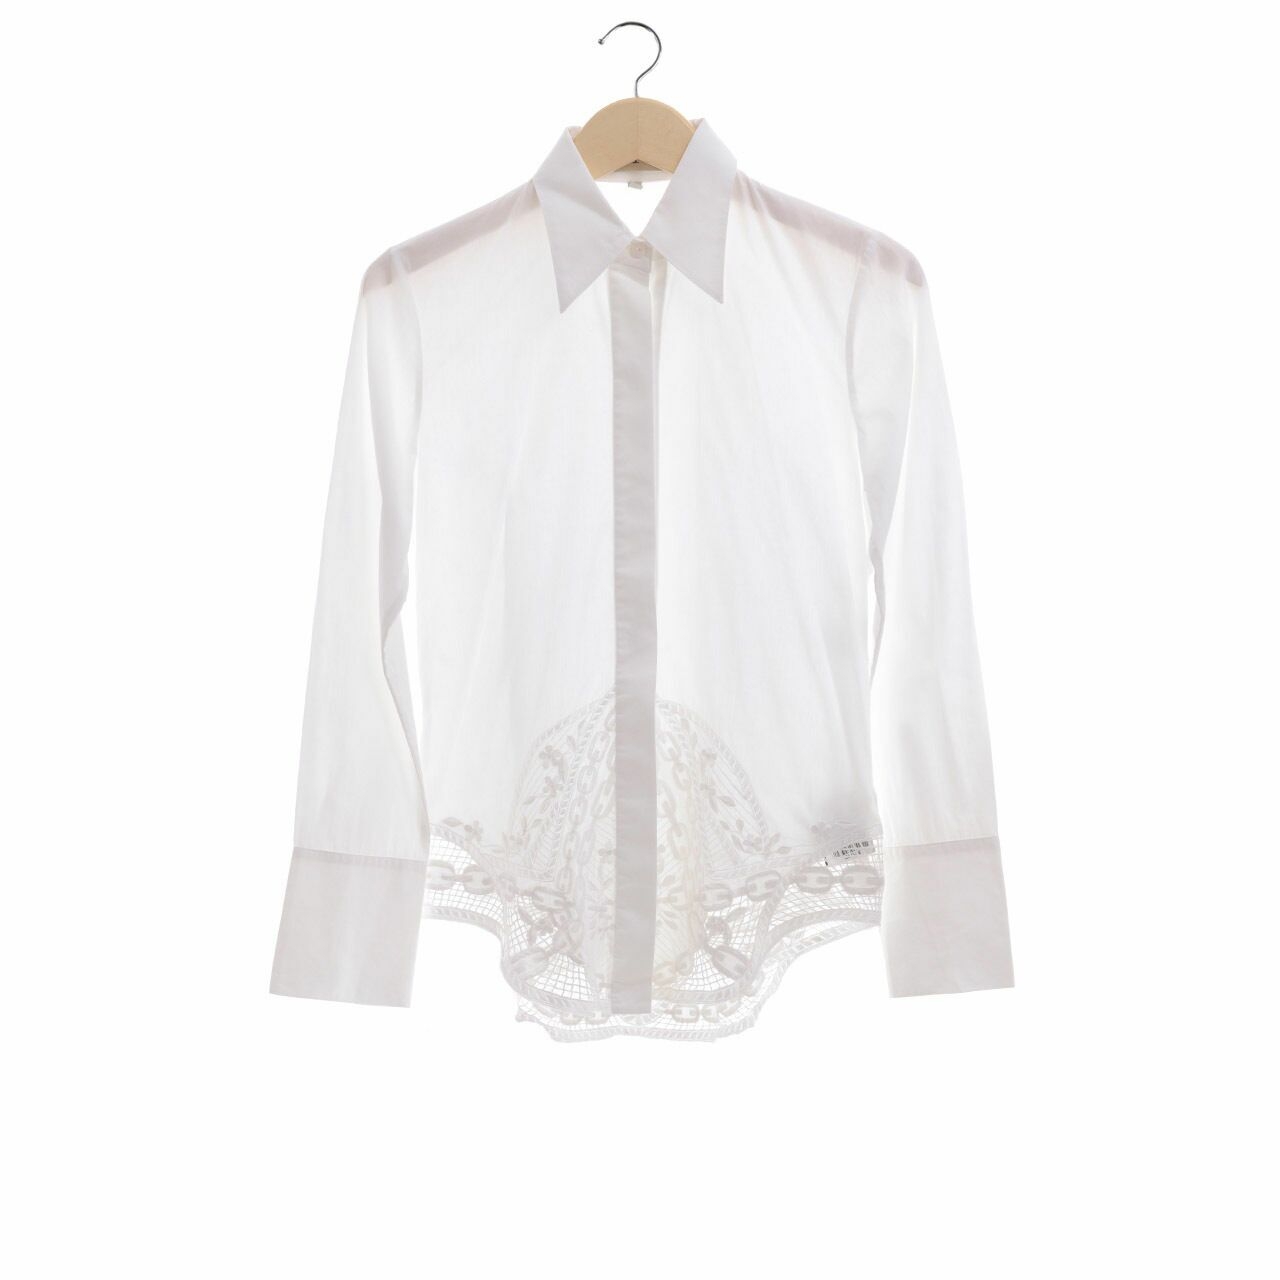 Toton White Lace Shirt